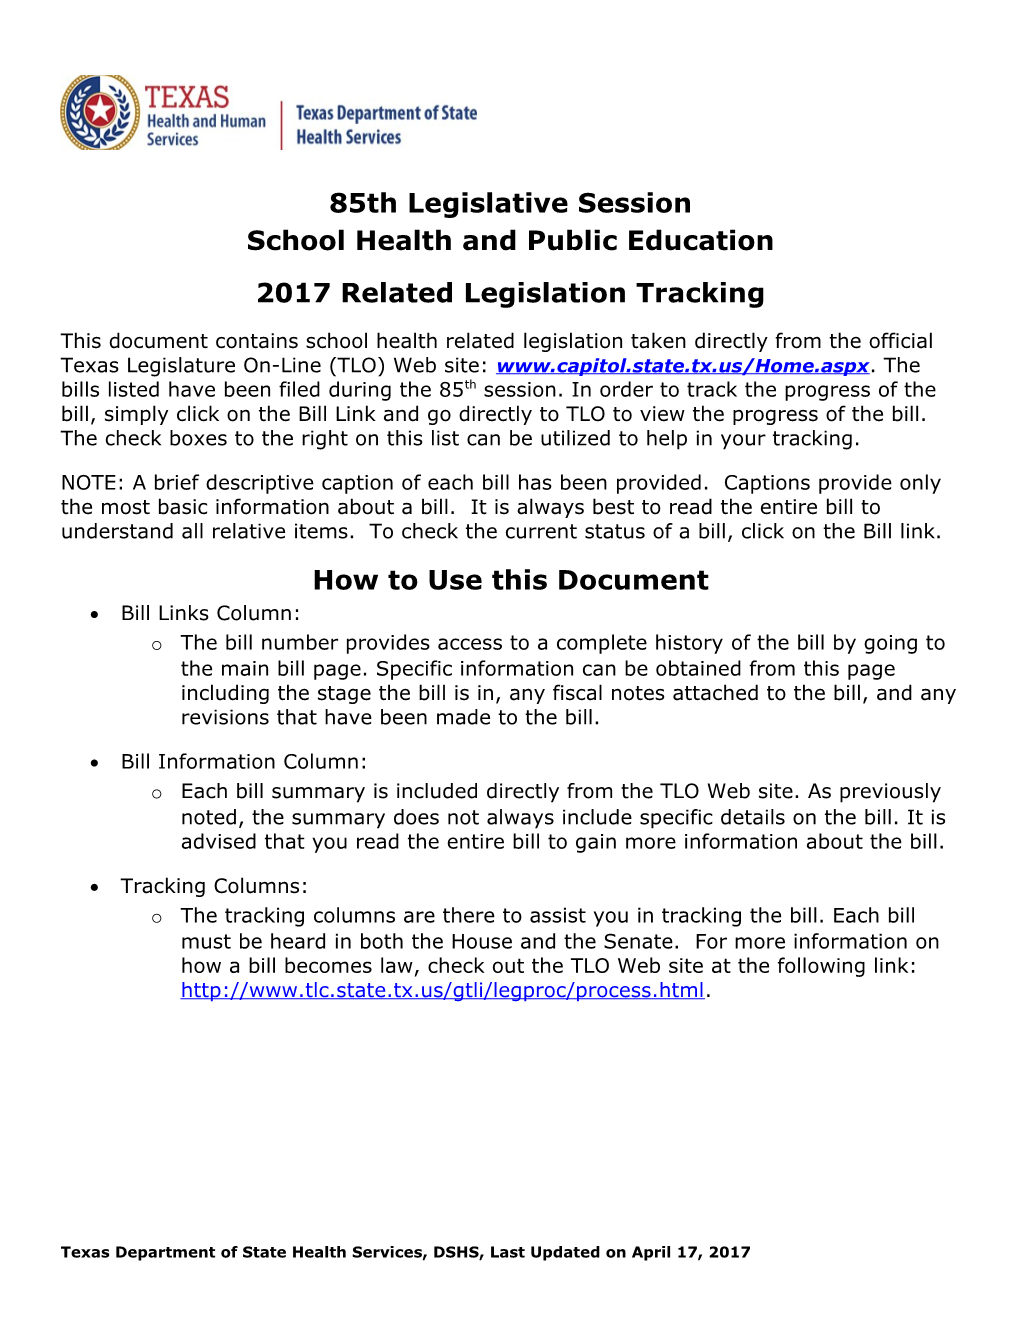 85Th Texas Legislative Session School Health Related Bills